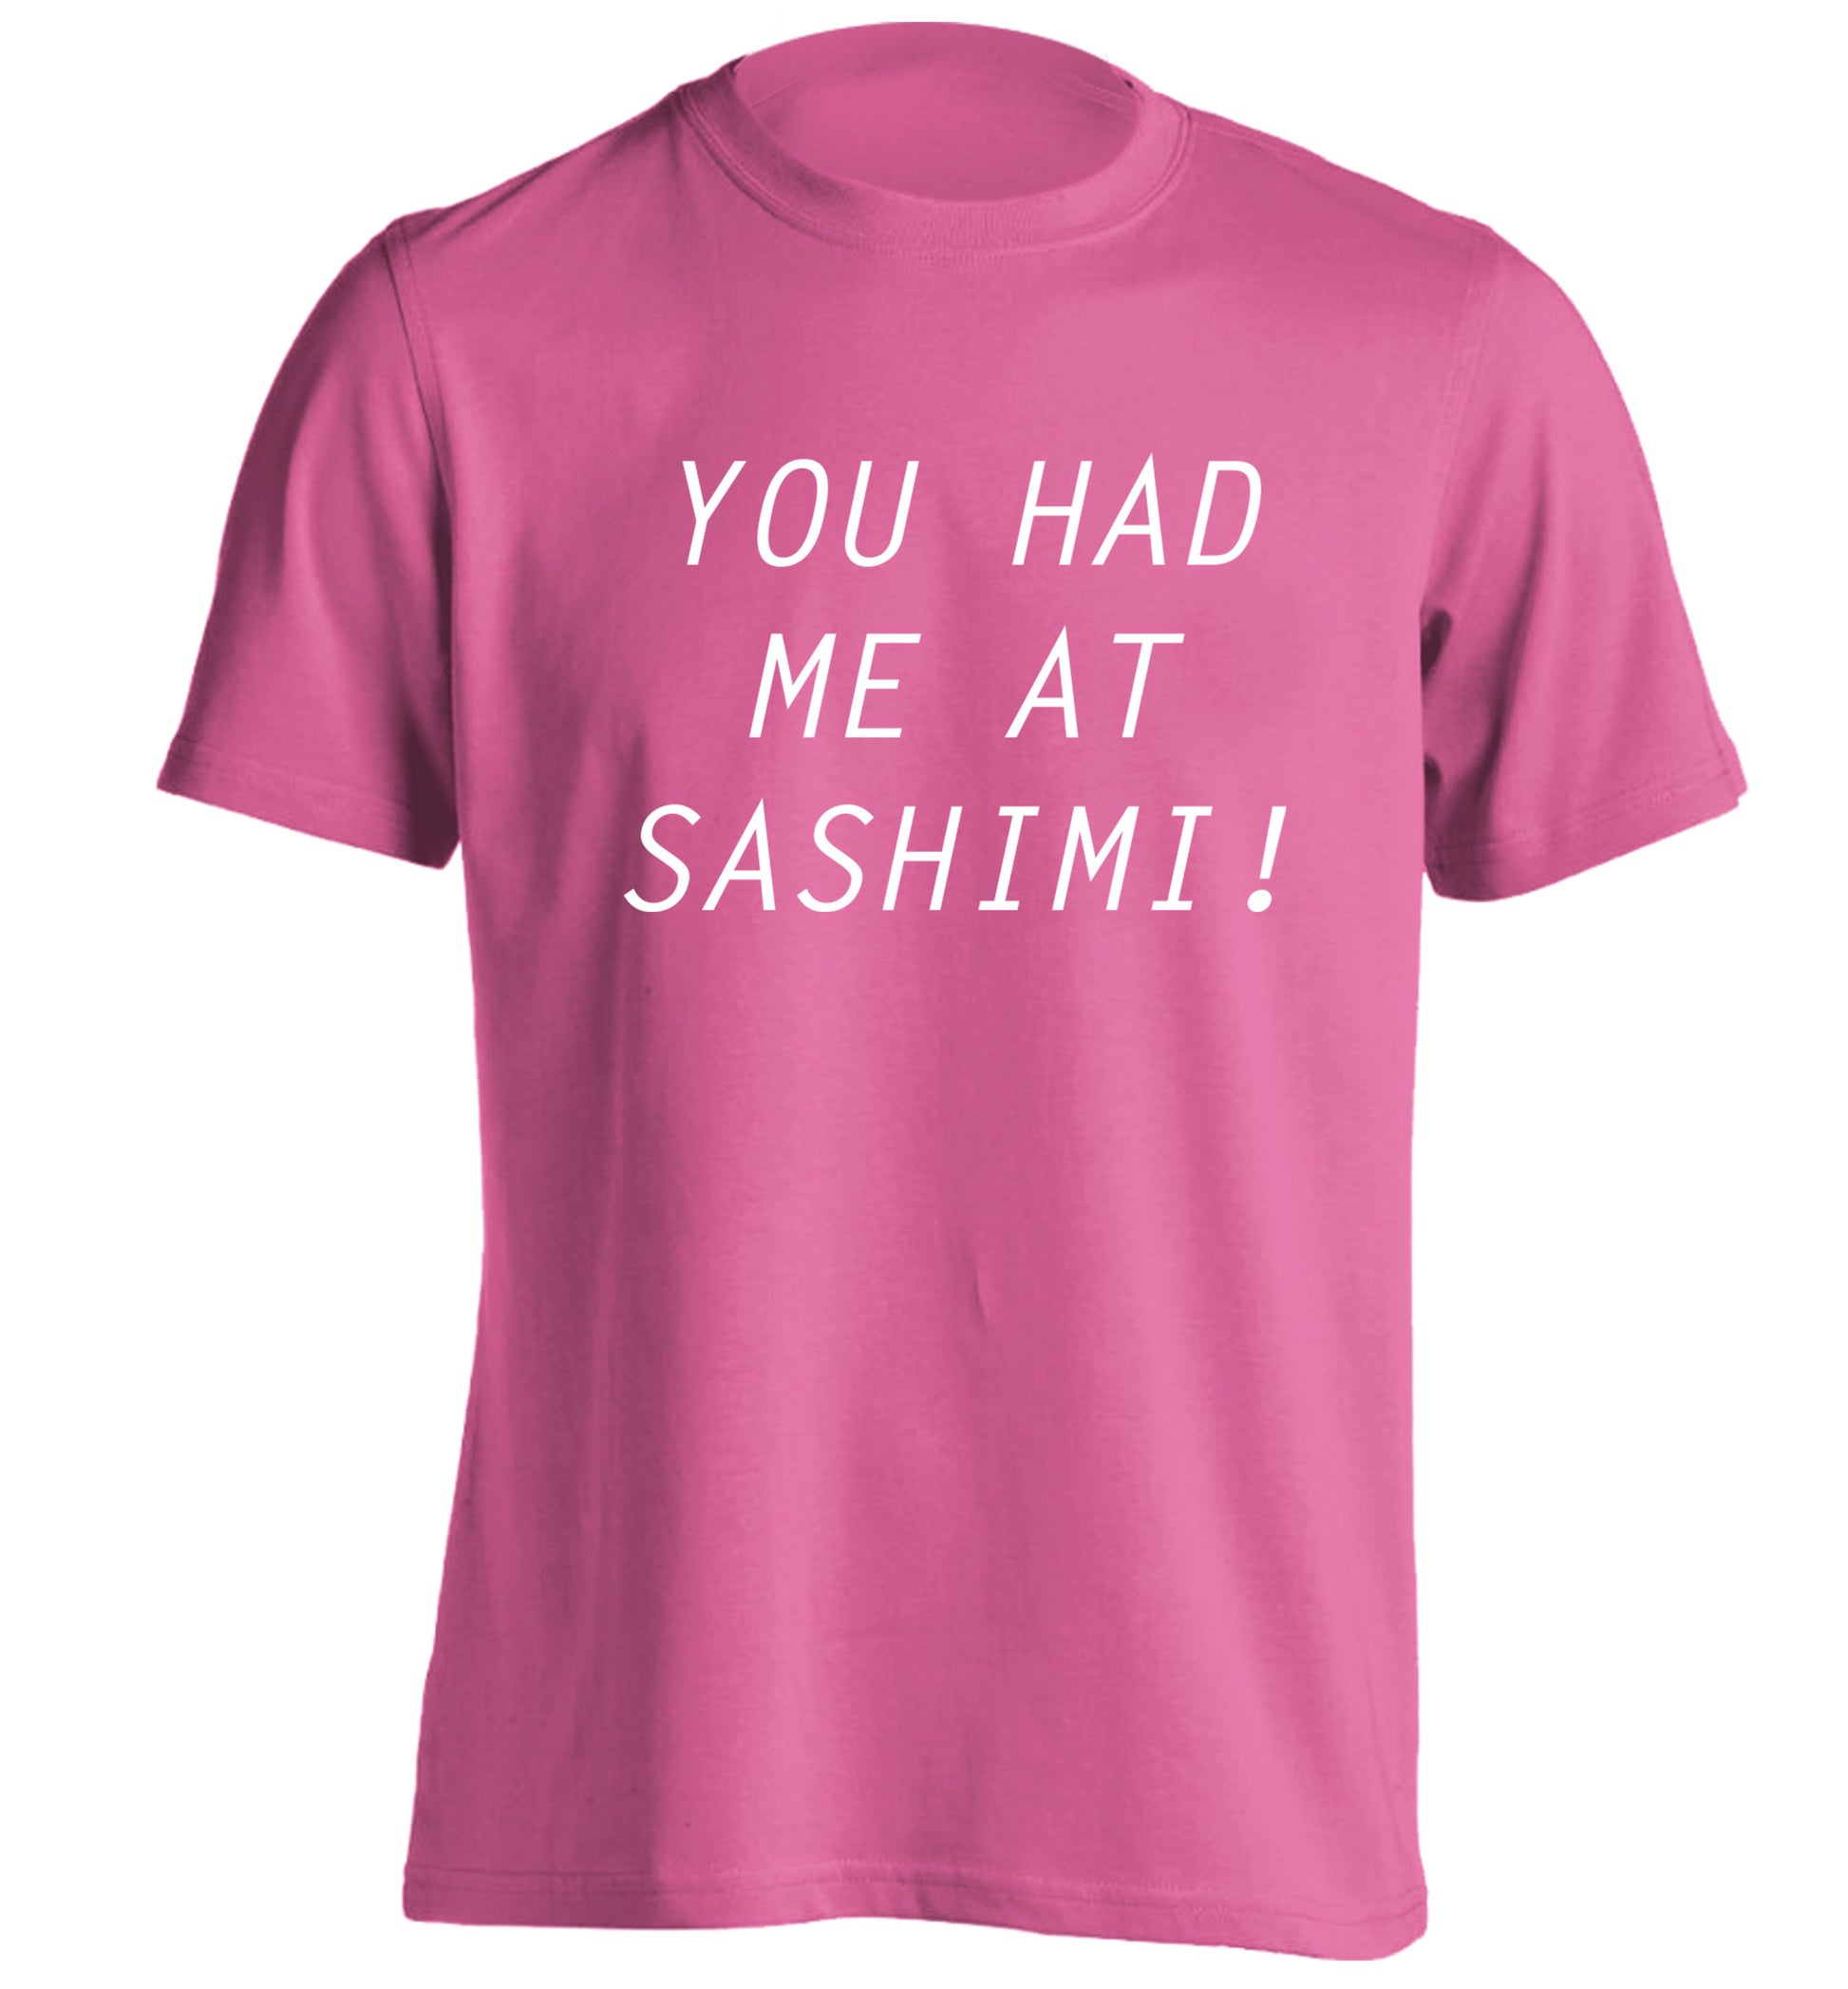 You had me at sashimi adults unisex pink Tshirt 2XL